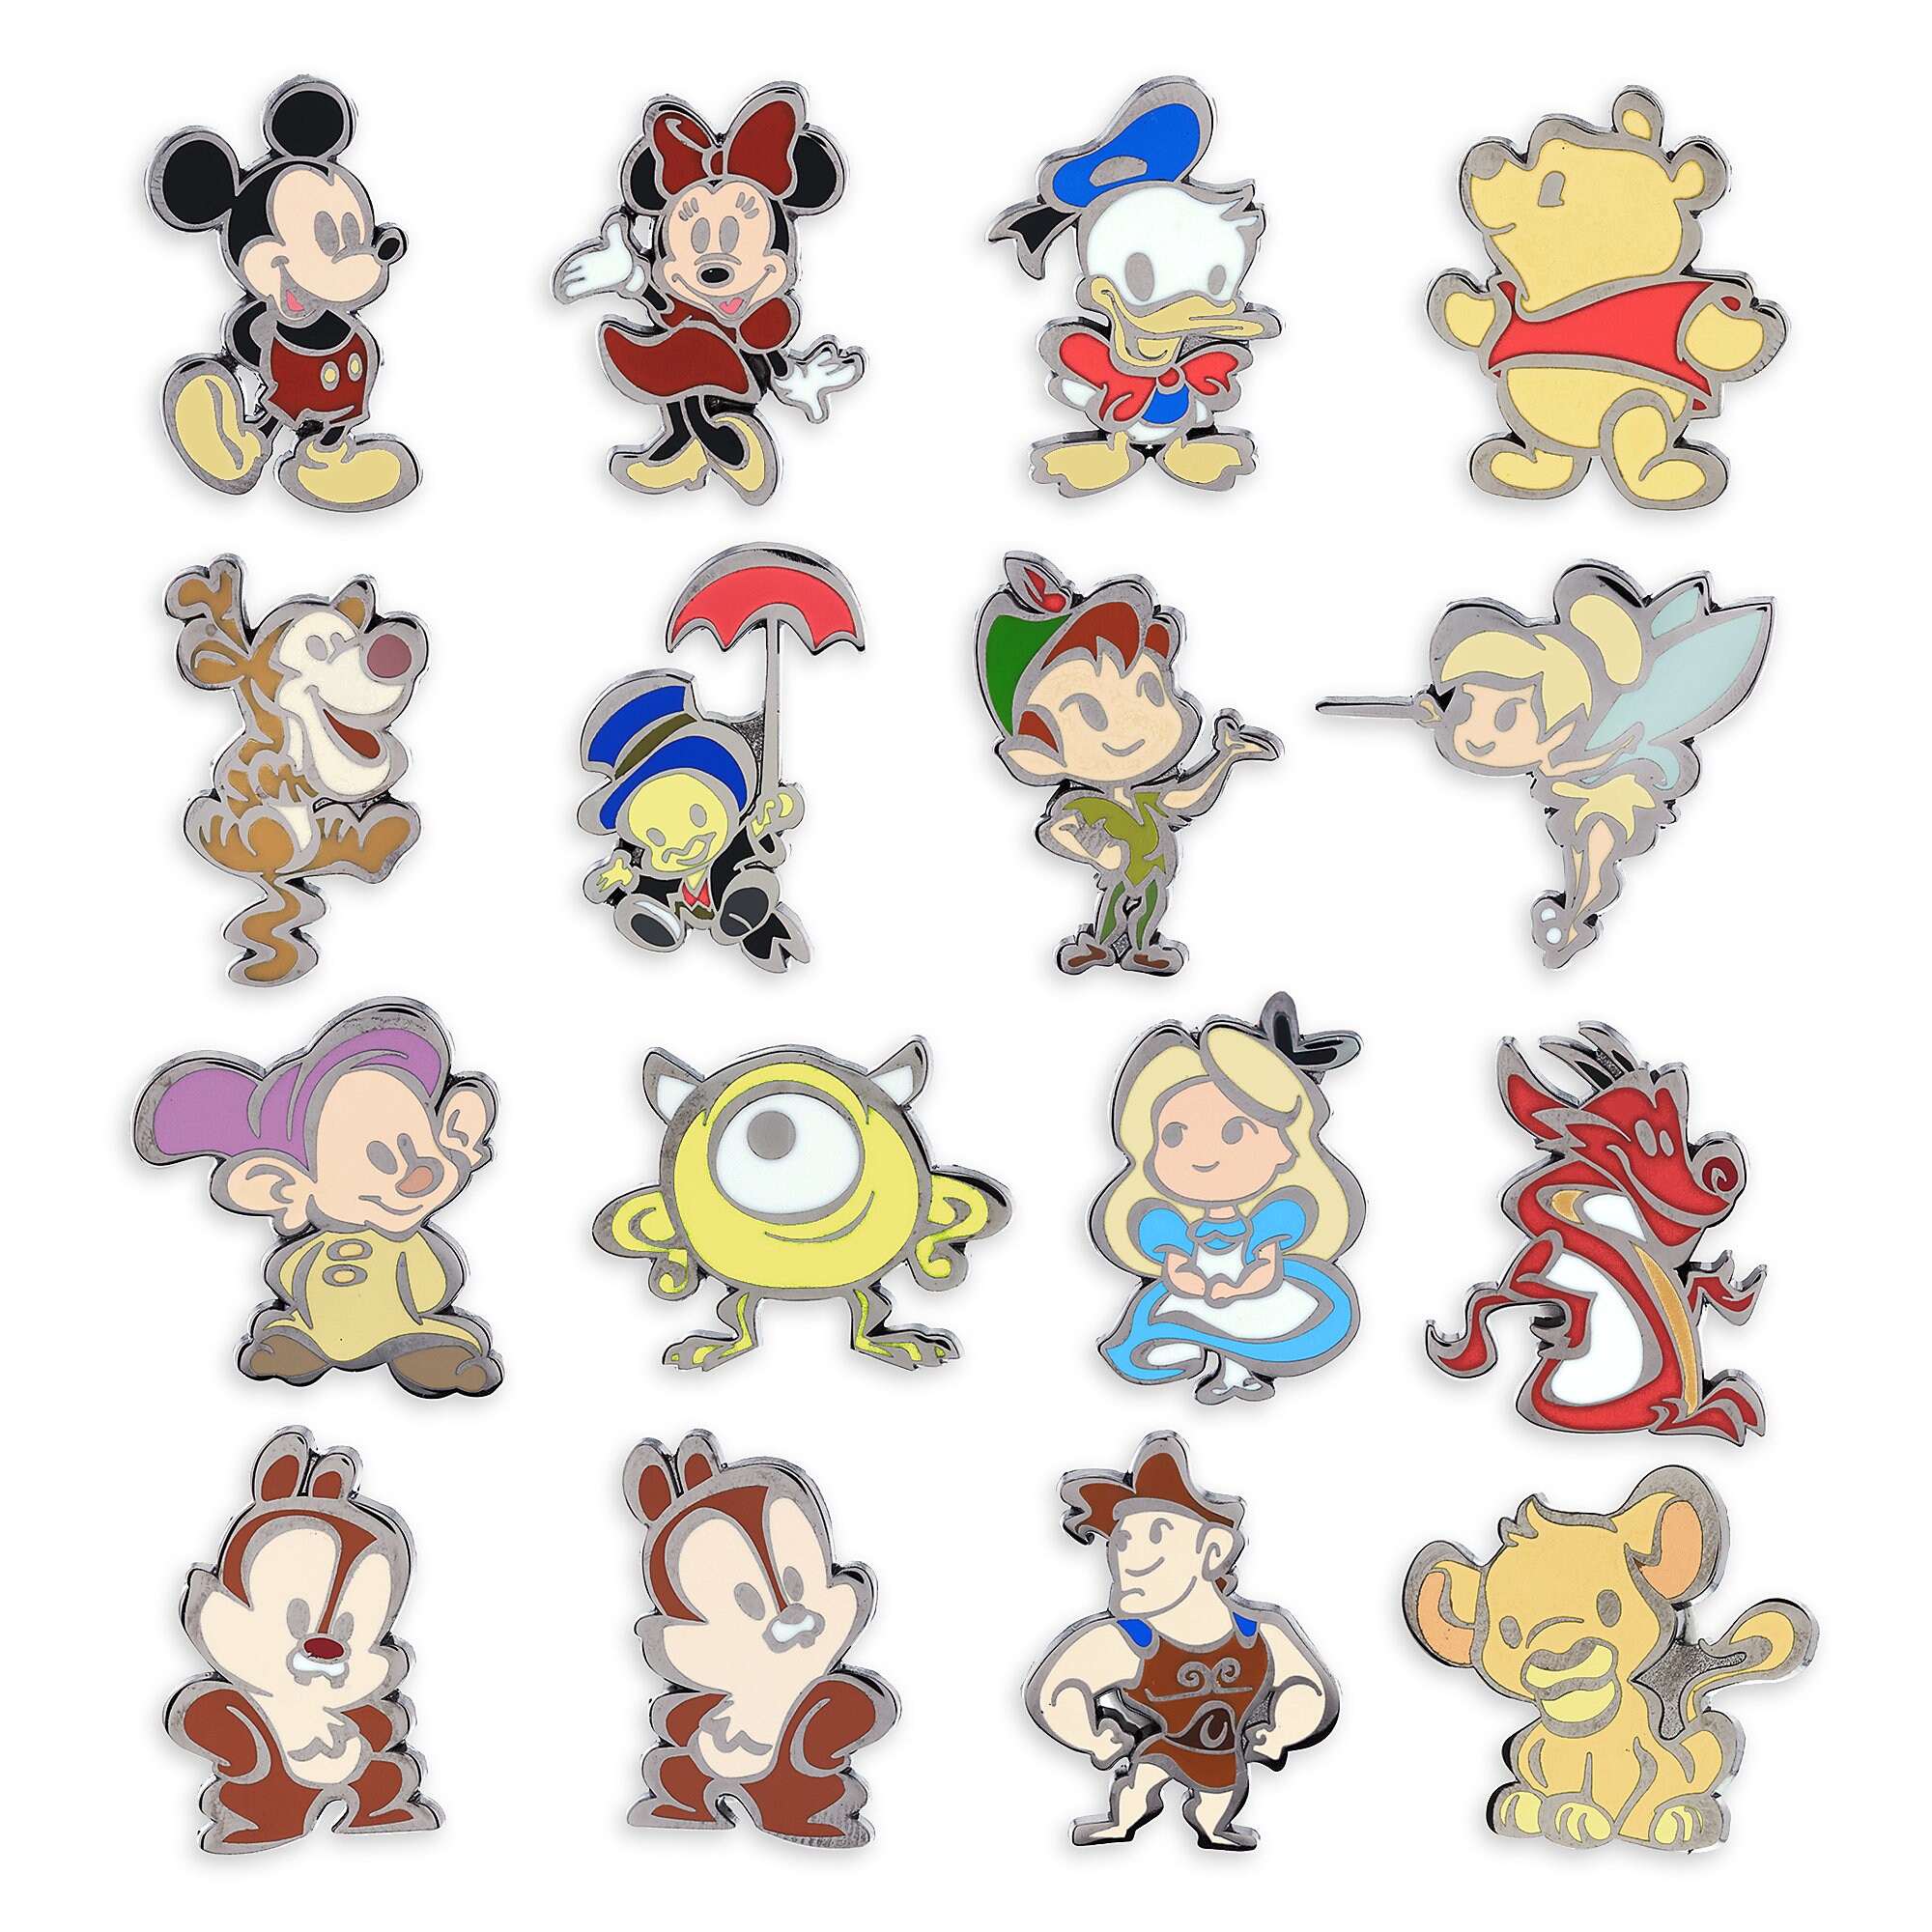 Disney Cuties Mystery Pin Pack has hit the shelves Dis